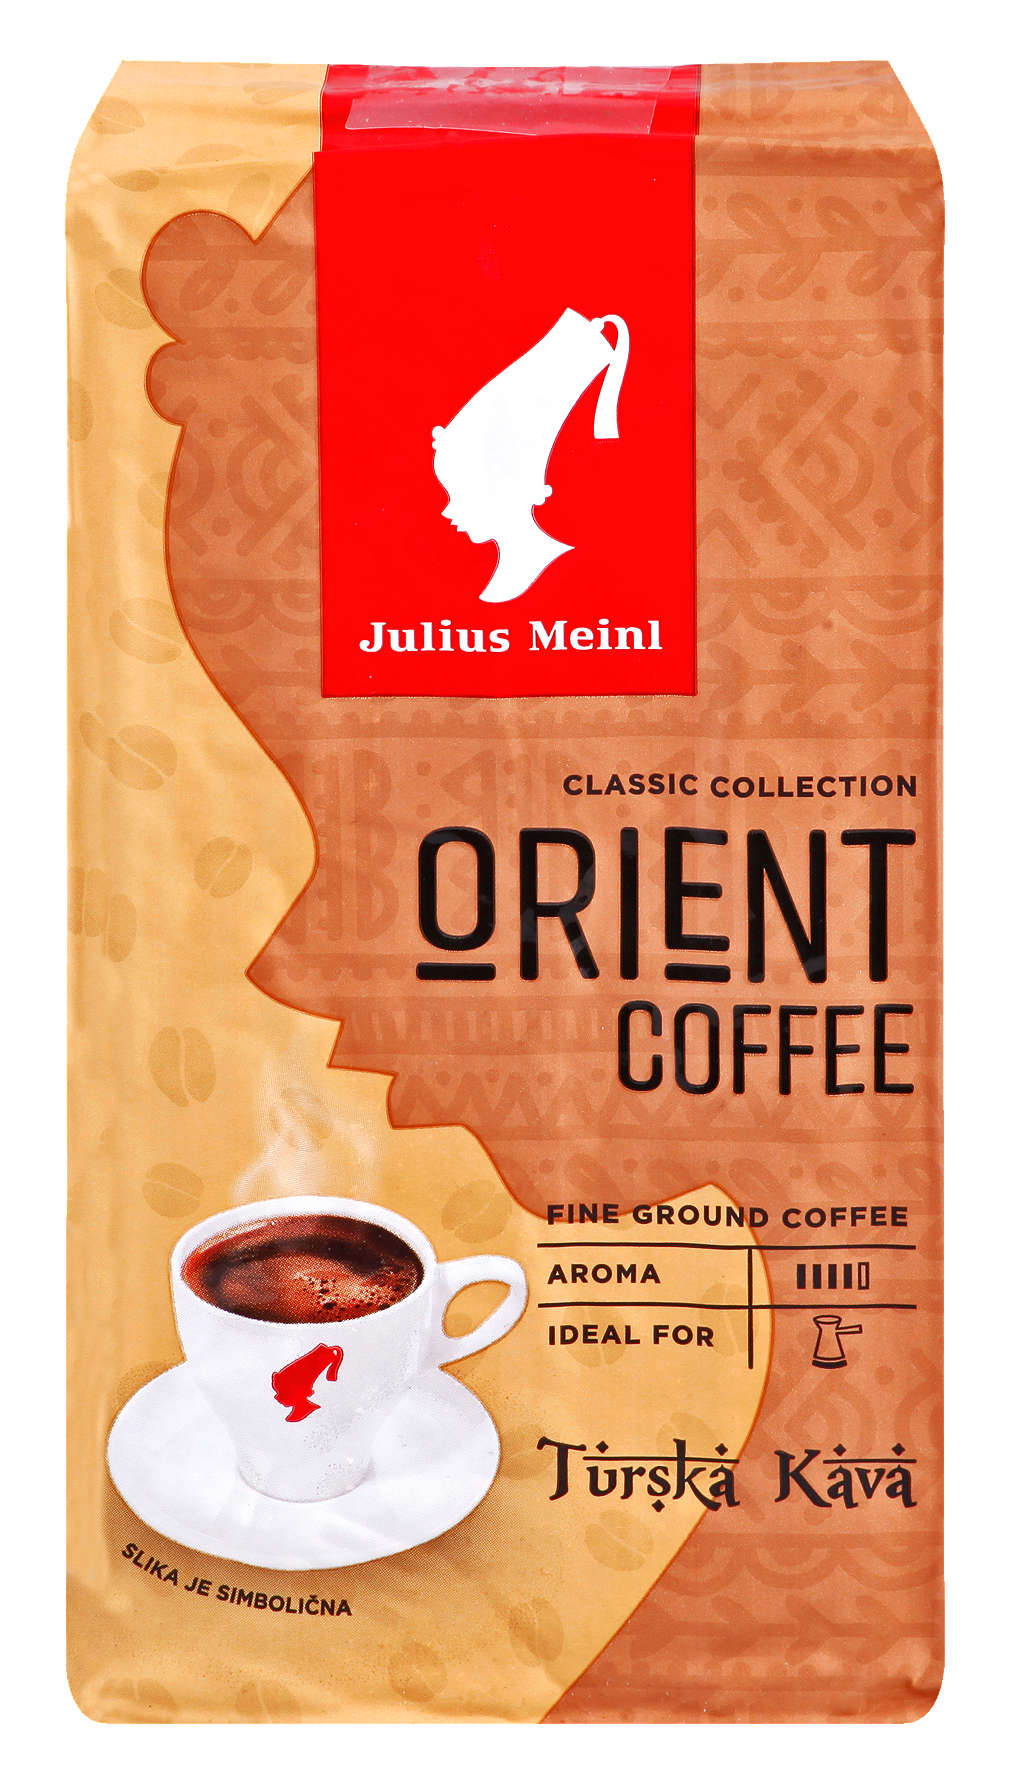 Fotografija ponude Julius Meinl Kava Orient Classic